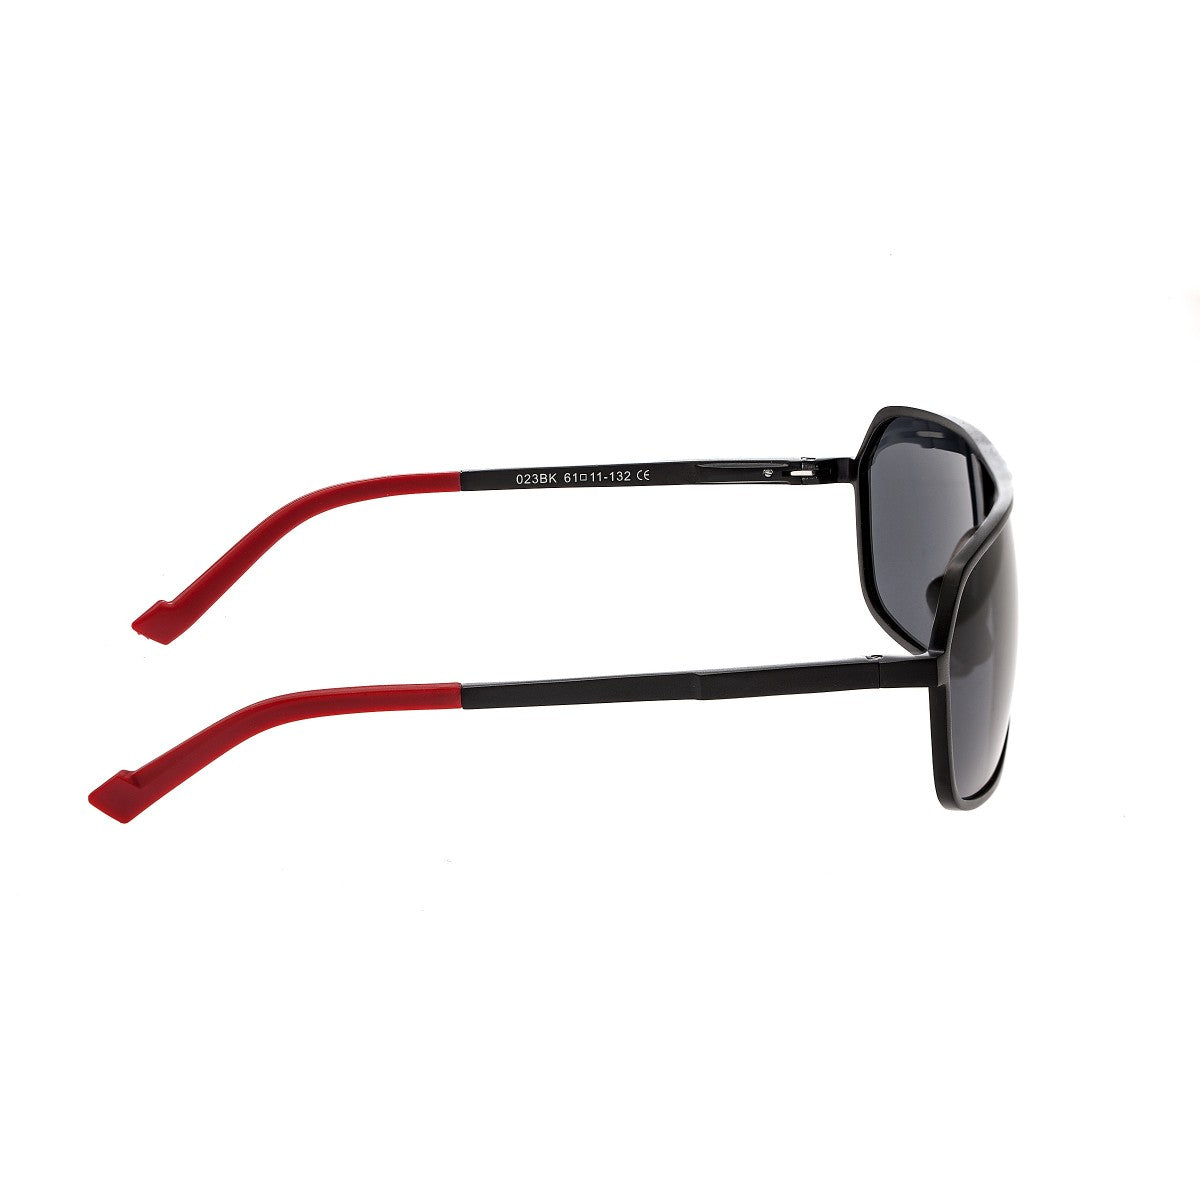 Breed Fornax Aluminium Polarized Sunglasses - Black/Black - BSG023BK